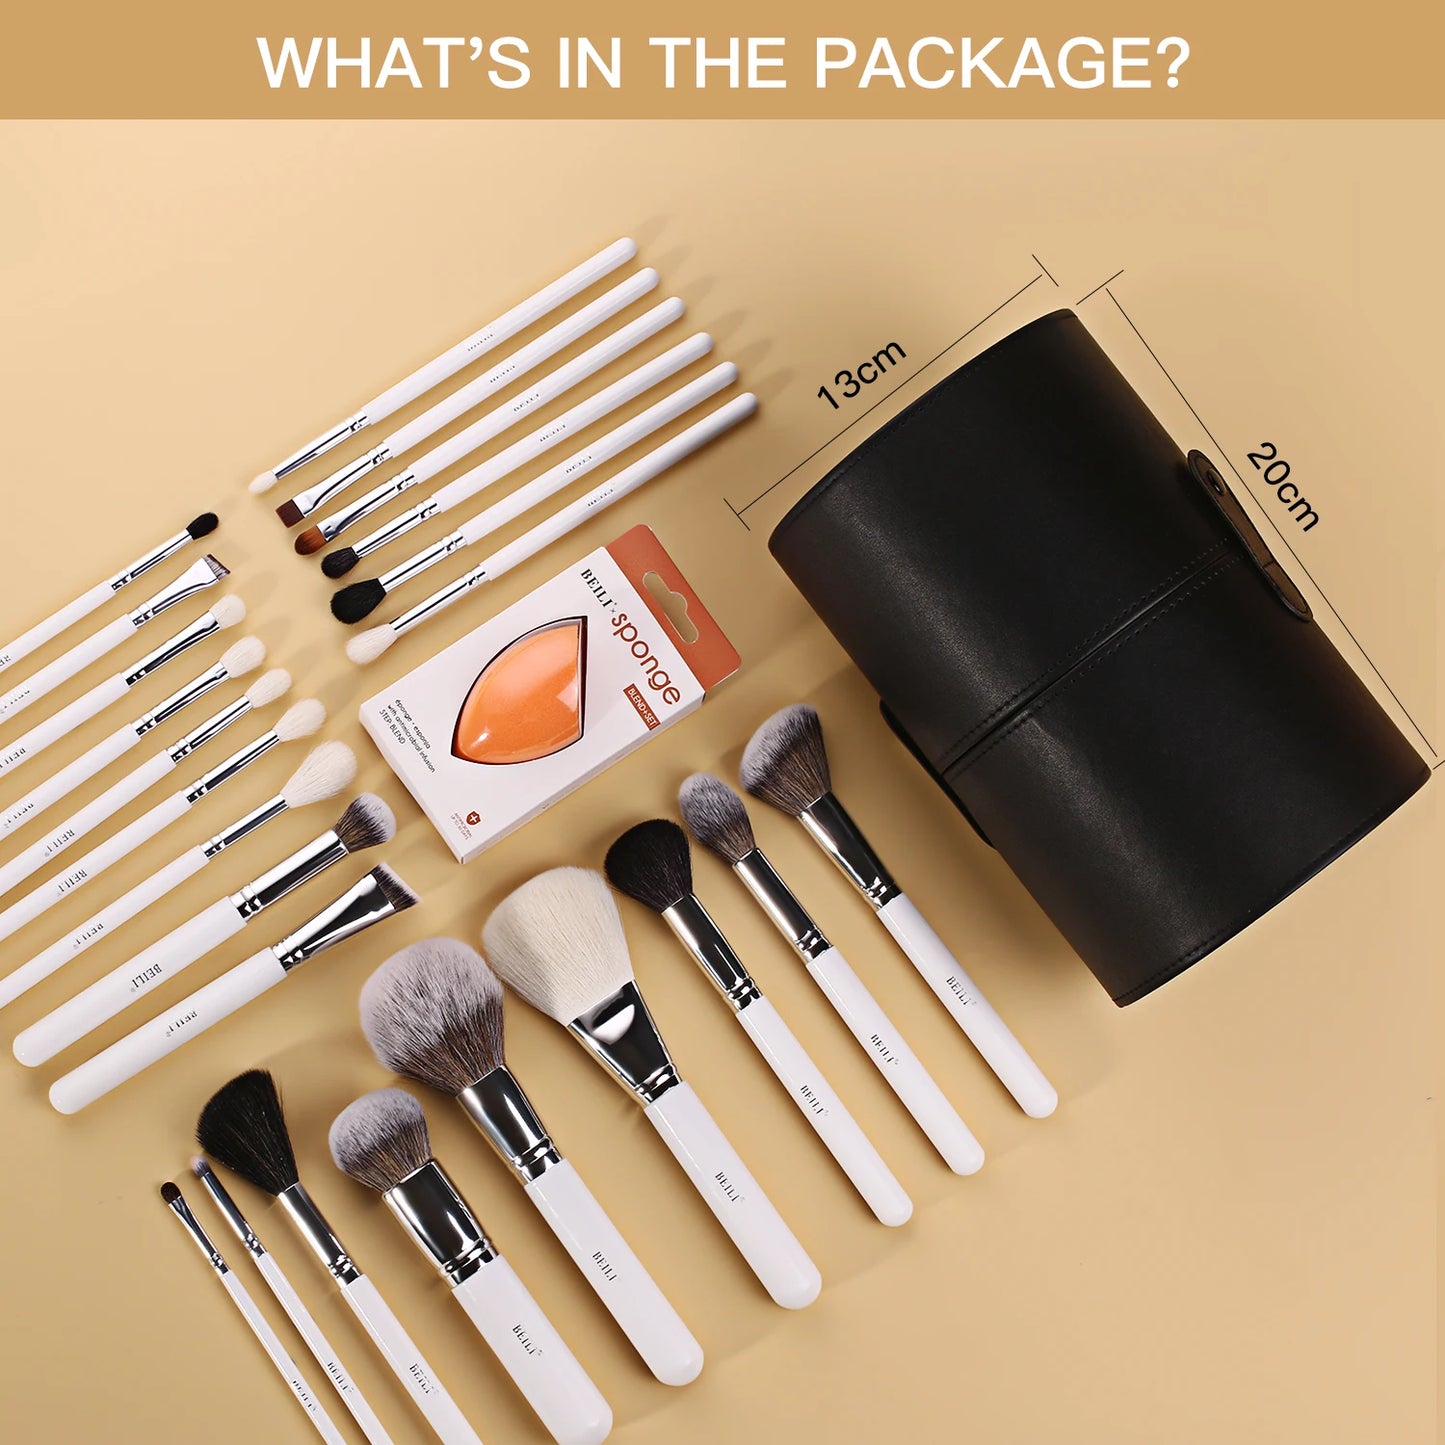 BEILI Makeup Brush Set with Holder and Sponge Makeup Tools Foundation Eyebrow Eyeshadow Brushes Kit with Make Up Puff 24-42pcs